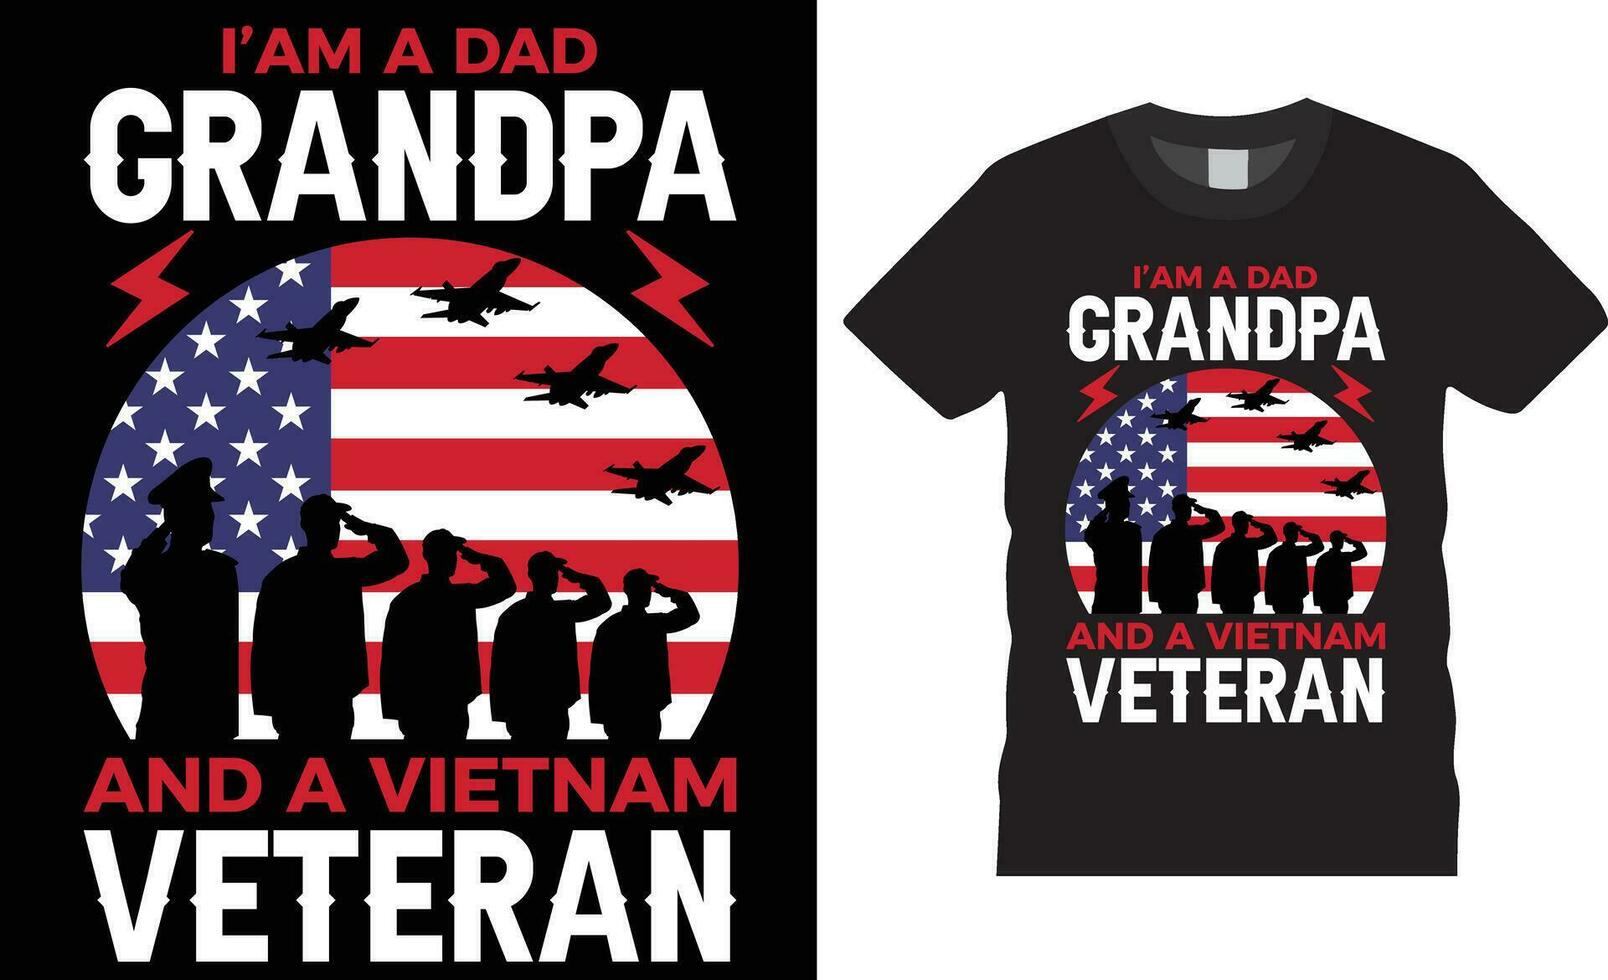 I'am a dad grandpa and a vietnam veteran American Veteran t-shirt design vector template.